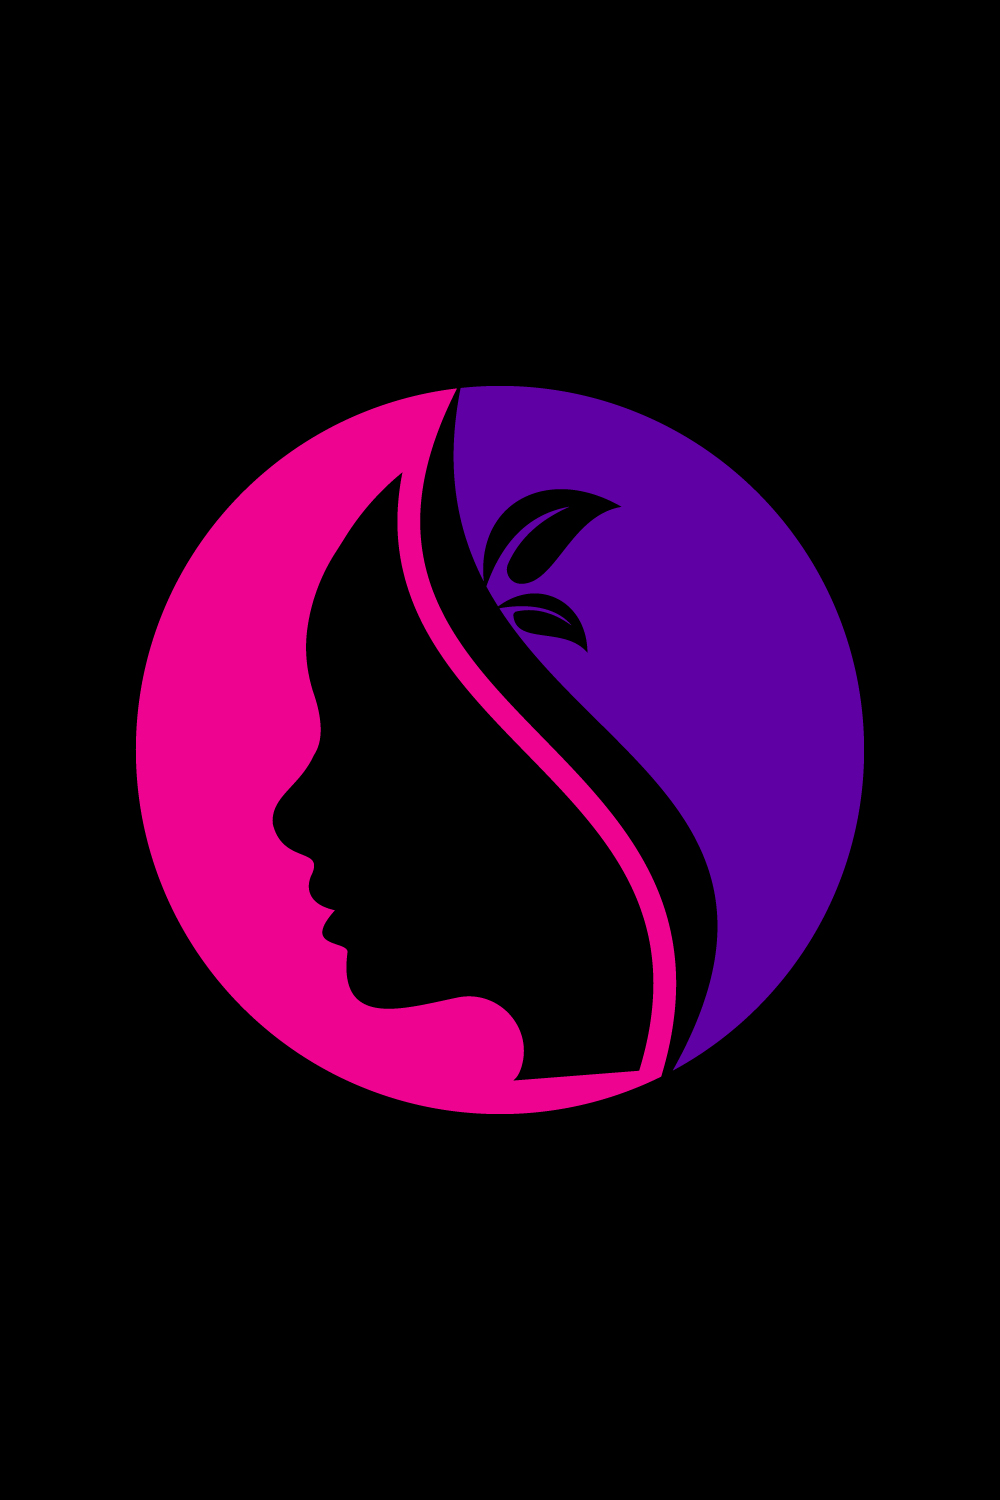 Beauty parlor, Skincare, Salon, Spa, Dermatology Clinic Flower Logo Design Vector design concept pinterest preview image.